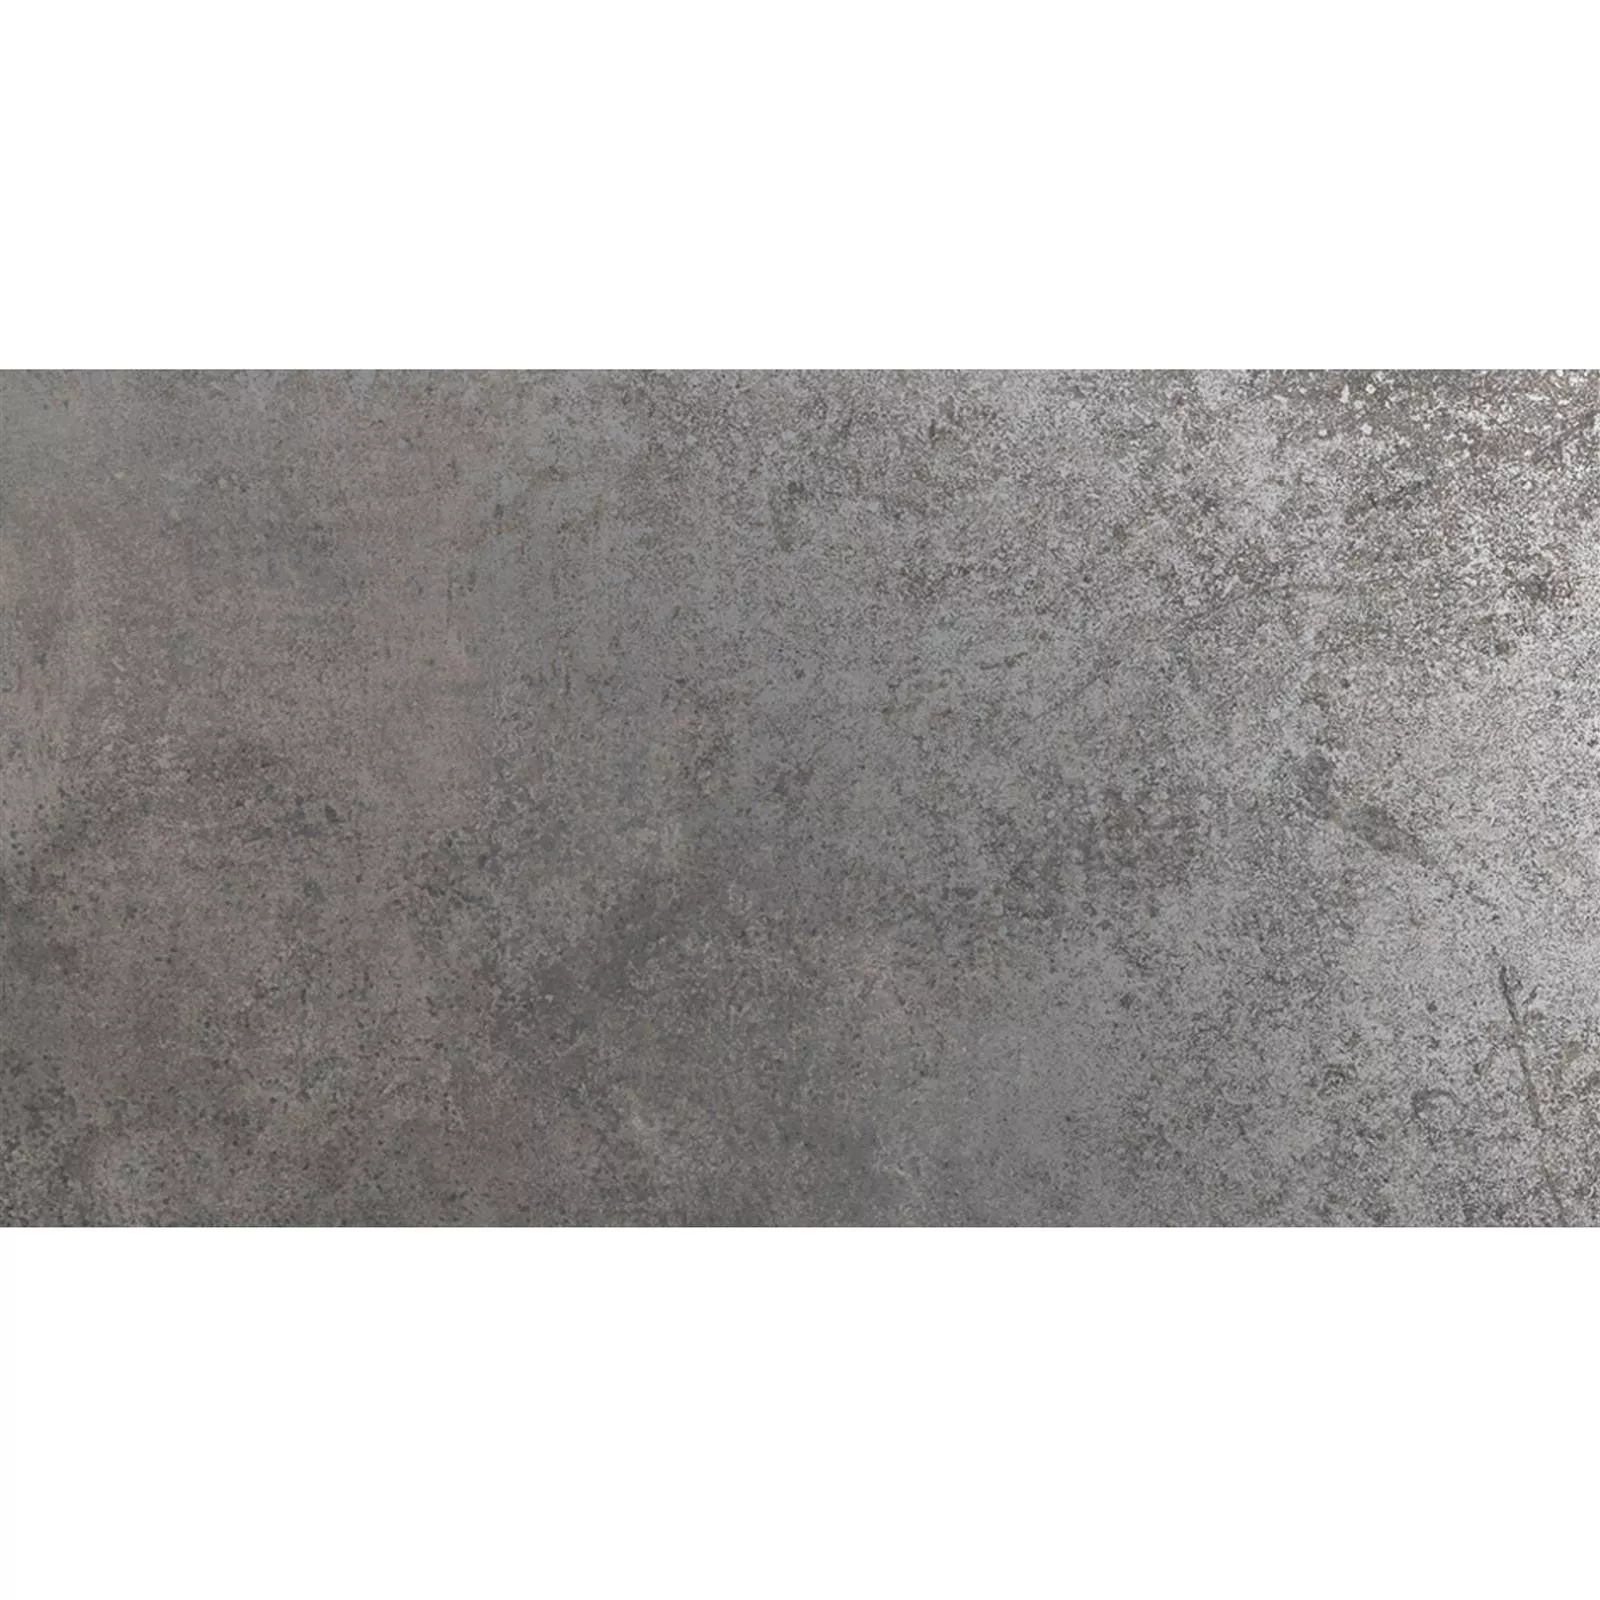 Podlahové Dlaždice Marathon Kovový Vzhled Stříbrná R10/B 30x60cm